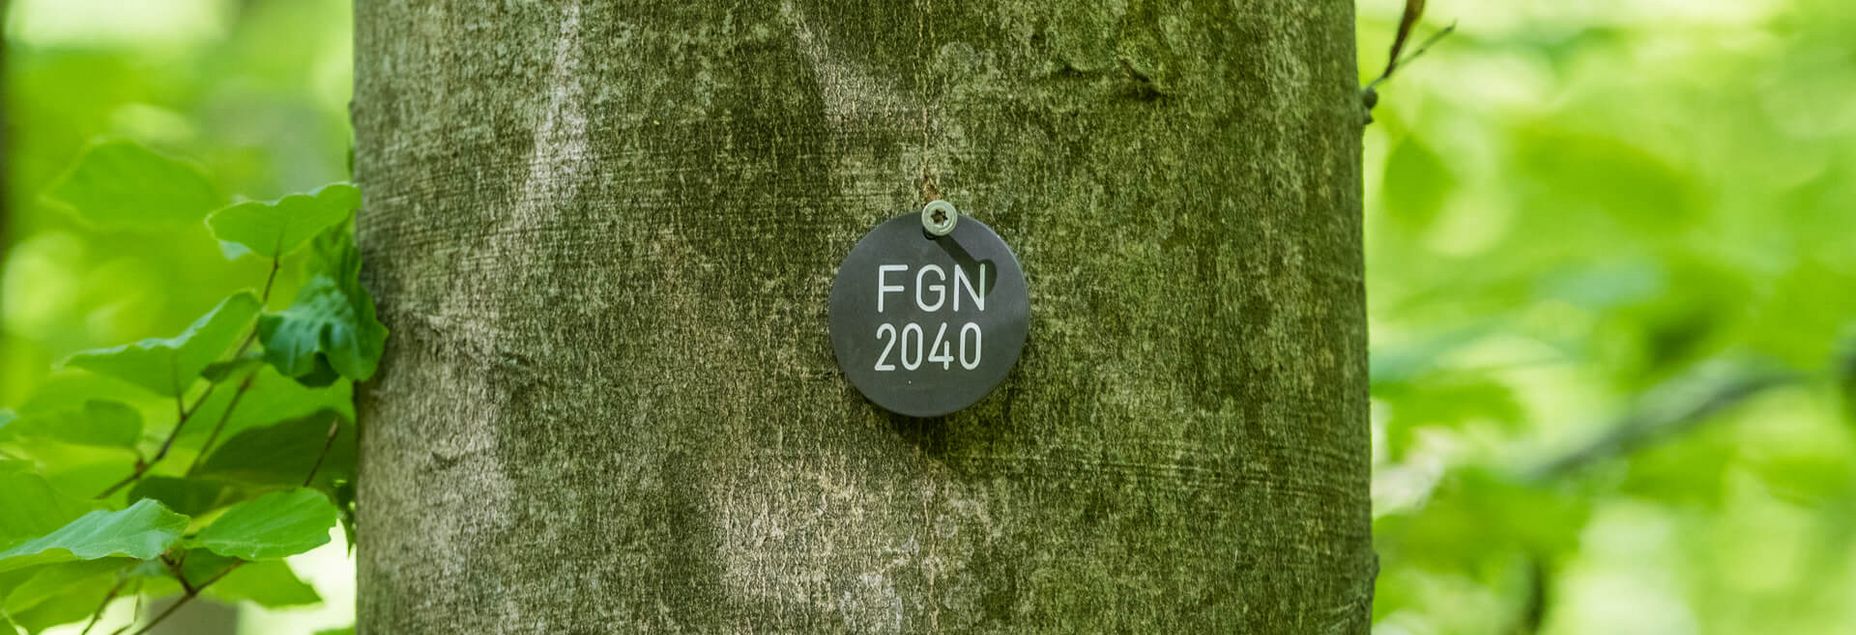 Baum FGN 2040 - Plakette